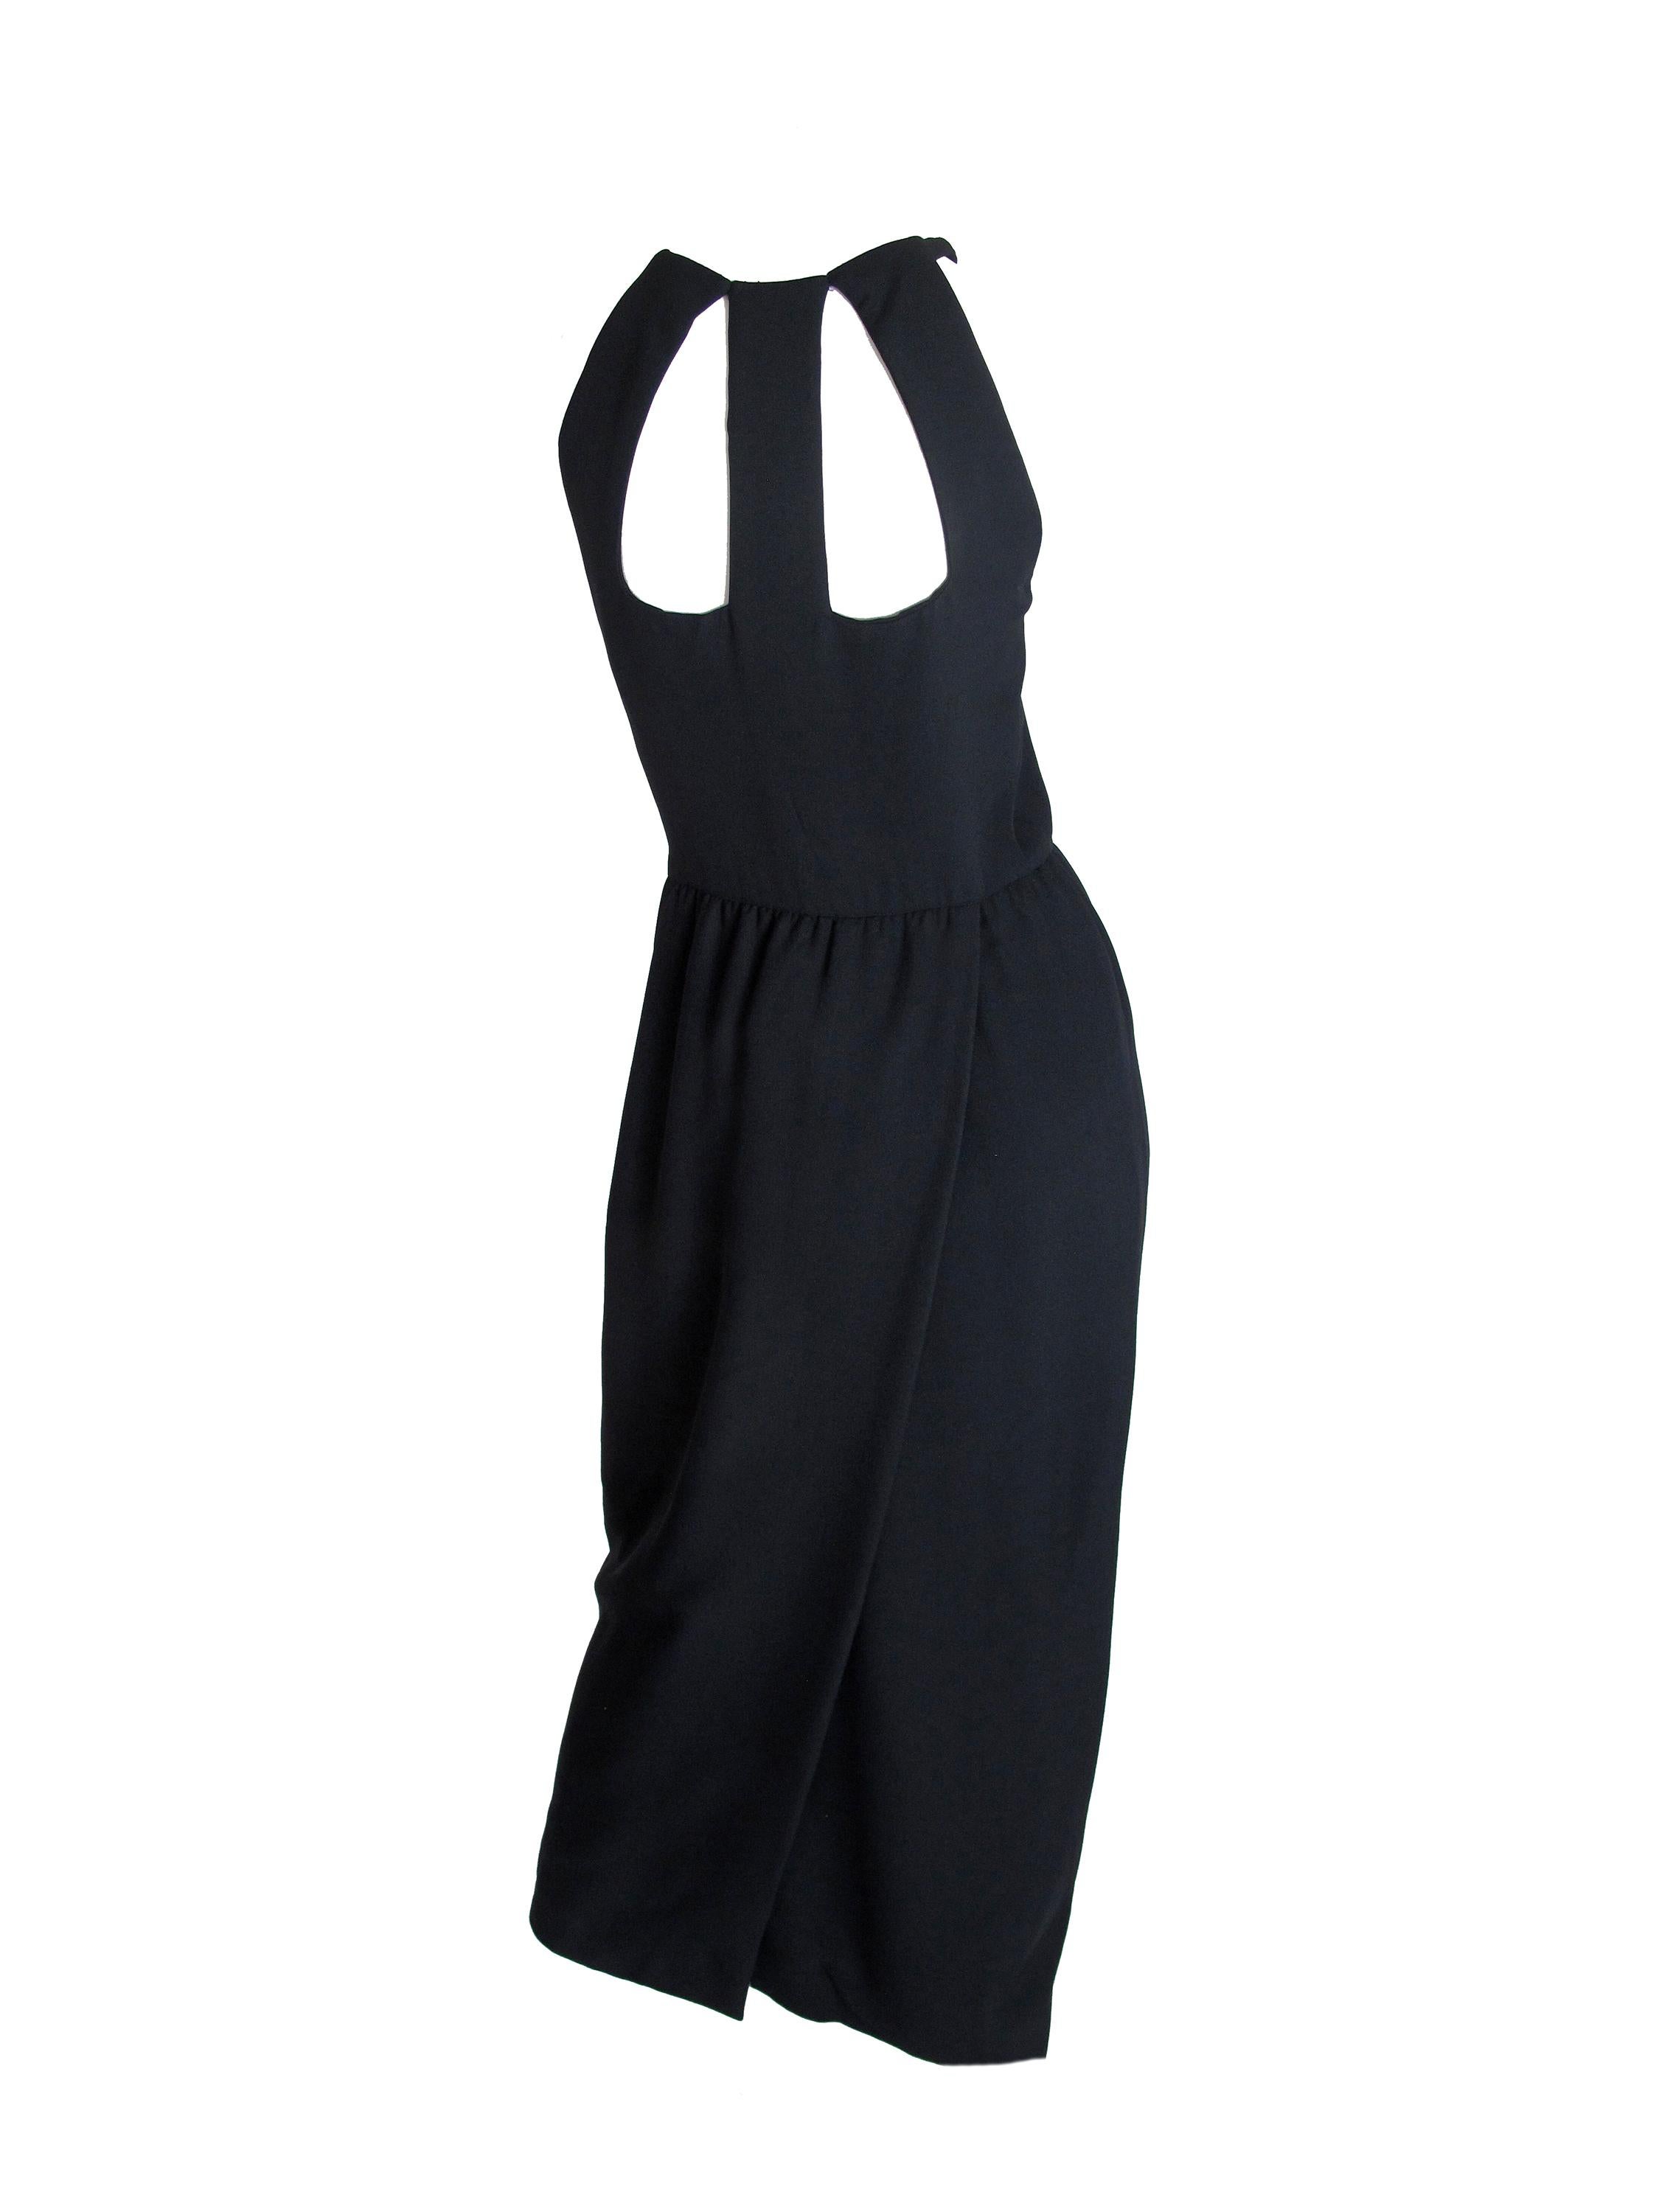 Oscar de la Renta Black Evening dress with Cut Outs For Sale at 1stDibs ...